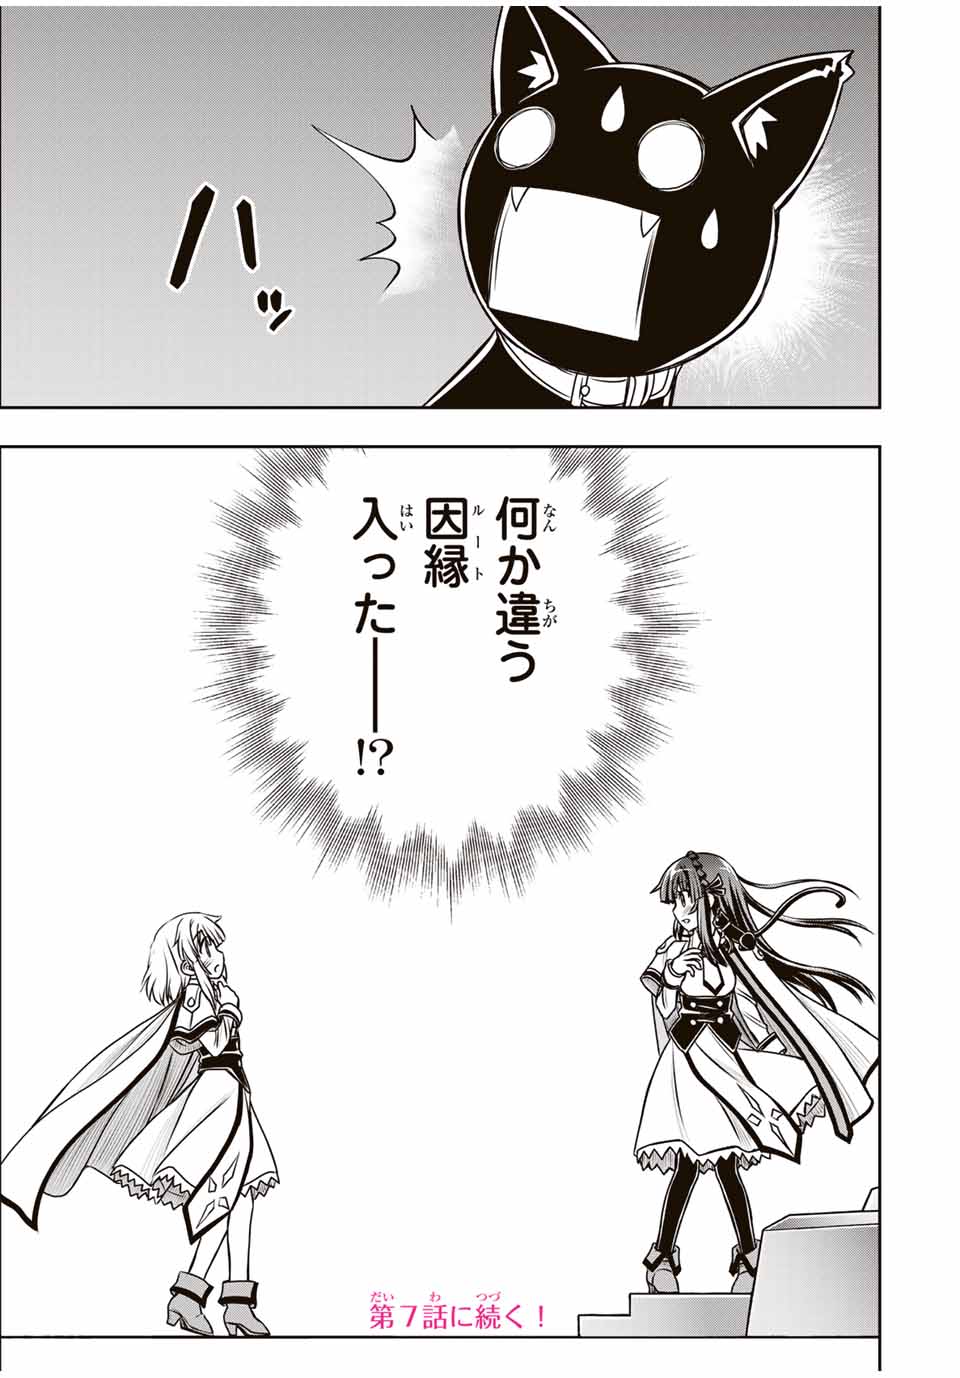 Nengan no Akuyaku Reijou (Last Boss) no Karada wo Teniiretazo!  - Chapter 6 - Page 23